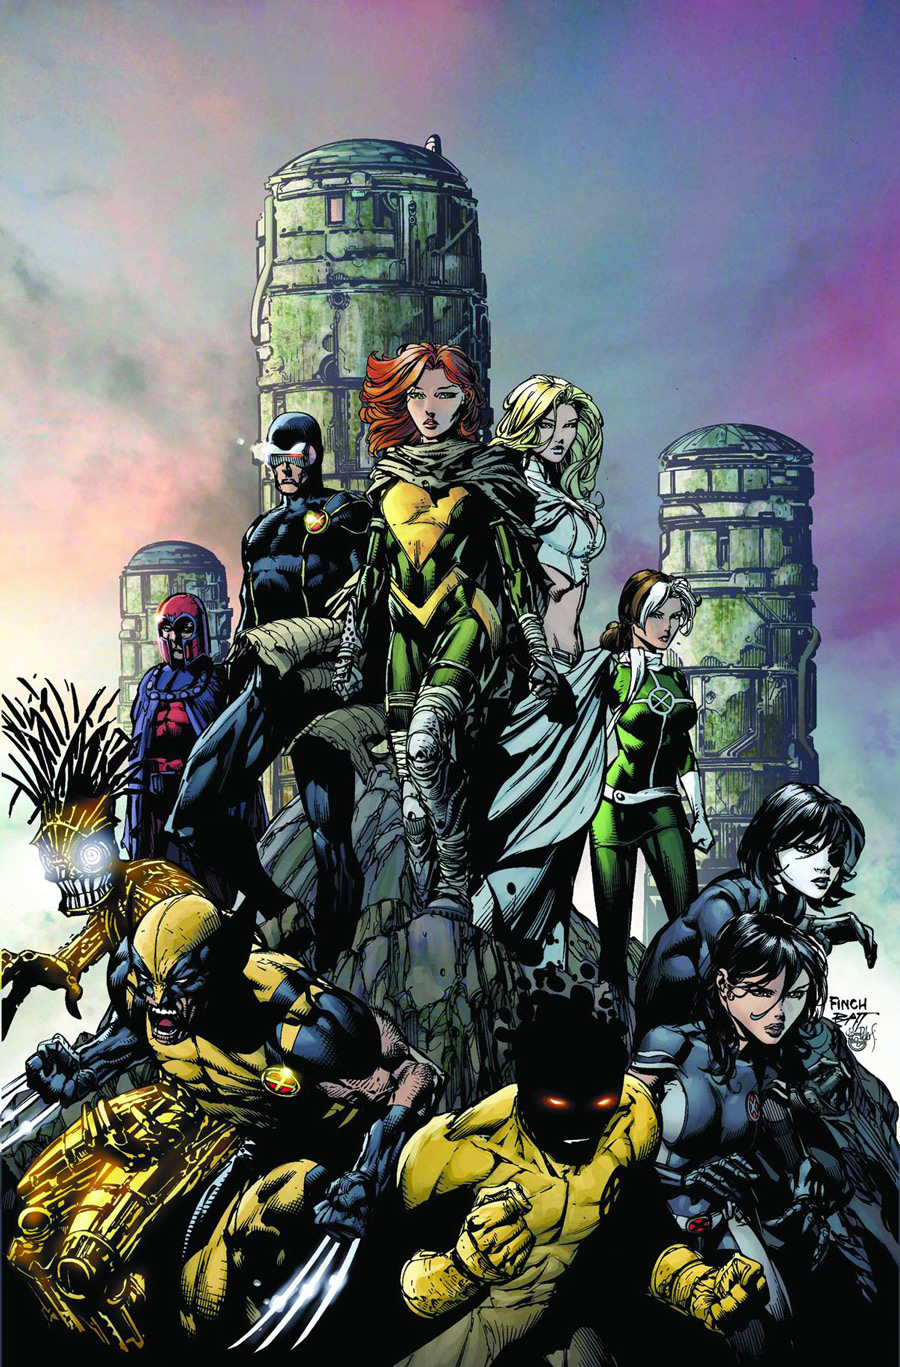 X-Men: Second Coming #2